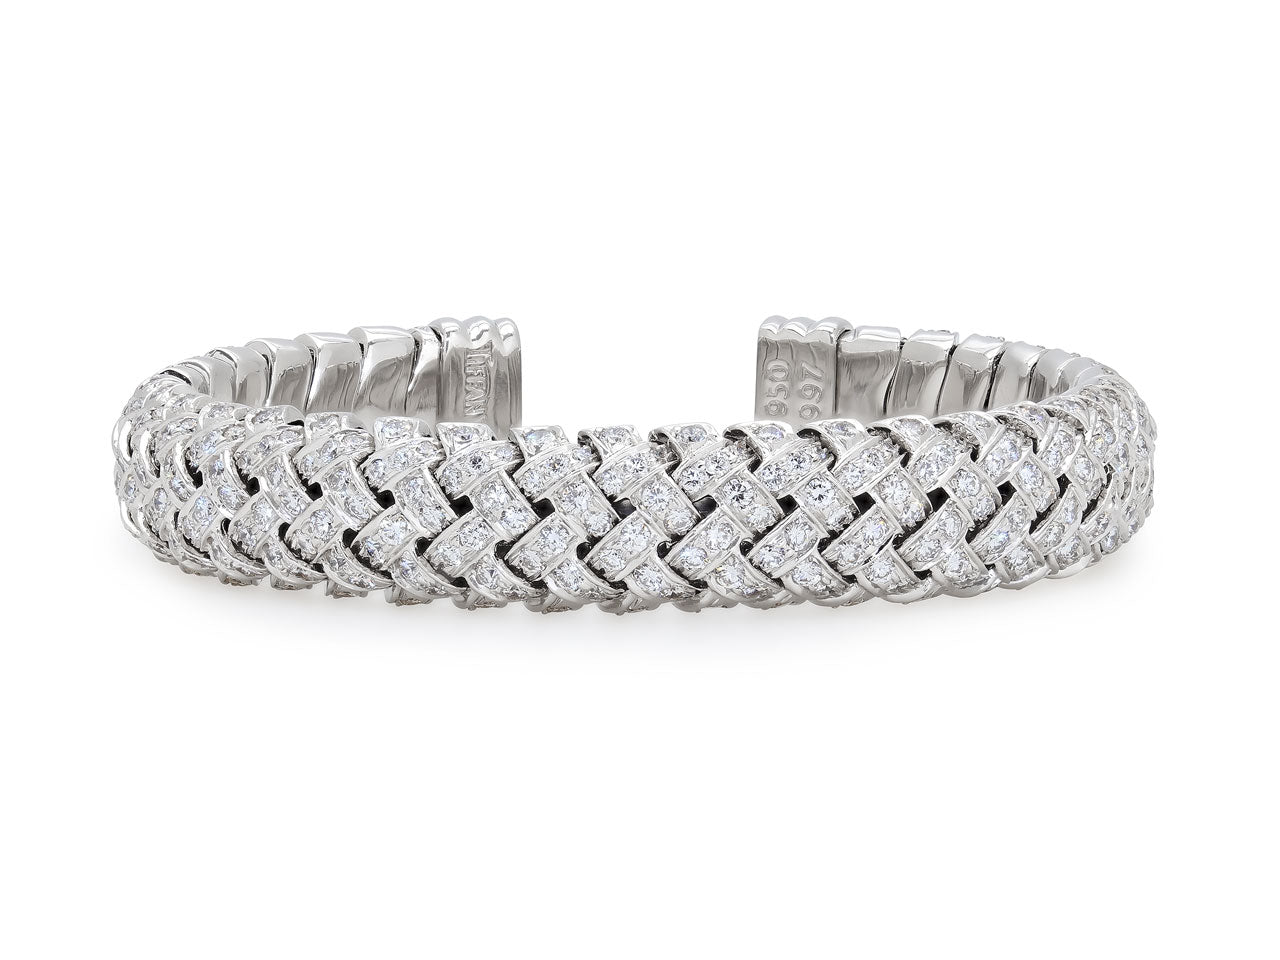 Tiffany & Co. 'Vannerie' Cuff Bracelet in Platinum